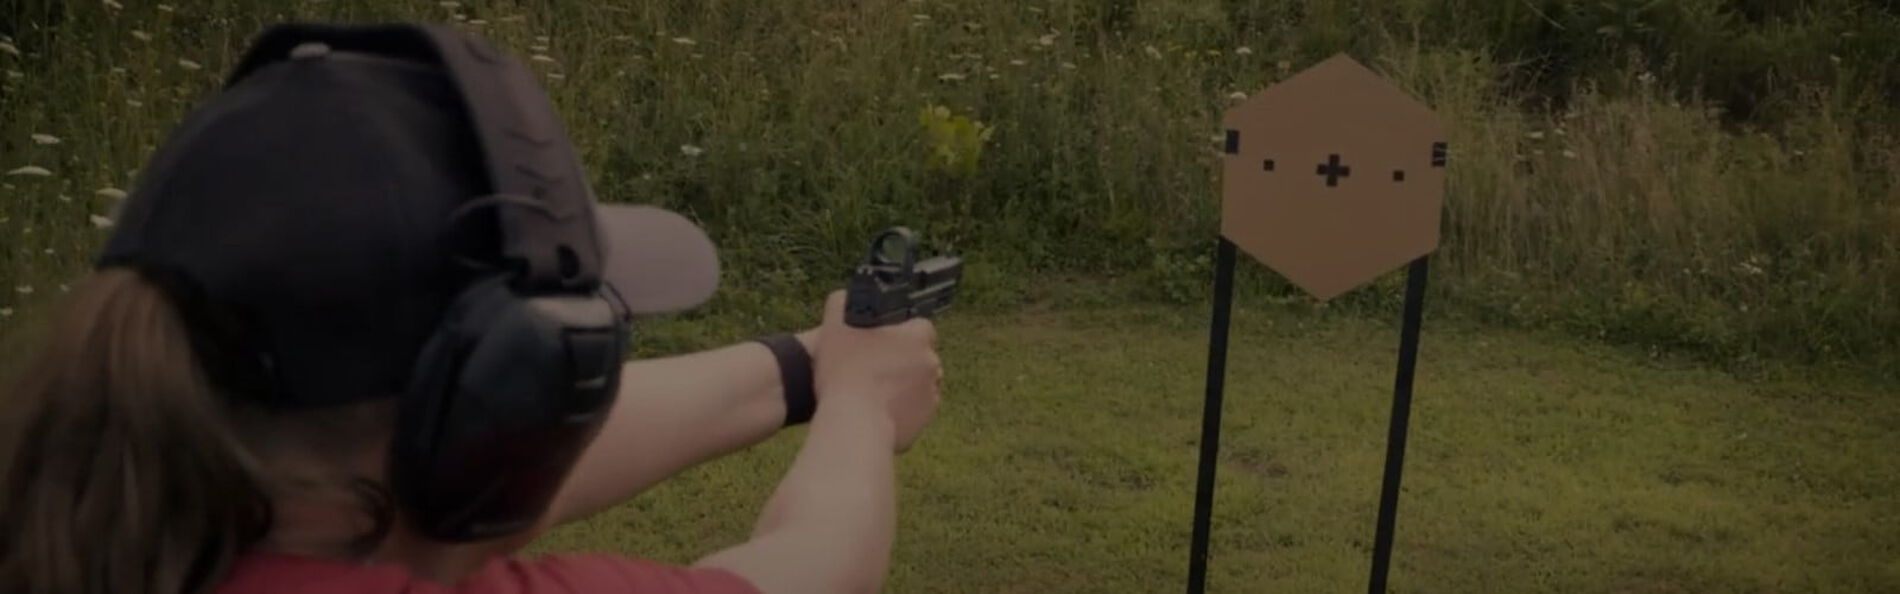 Julie Golob aiming a handgun at a target outside